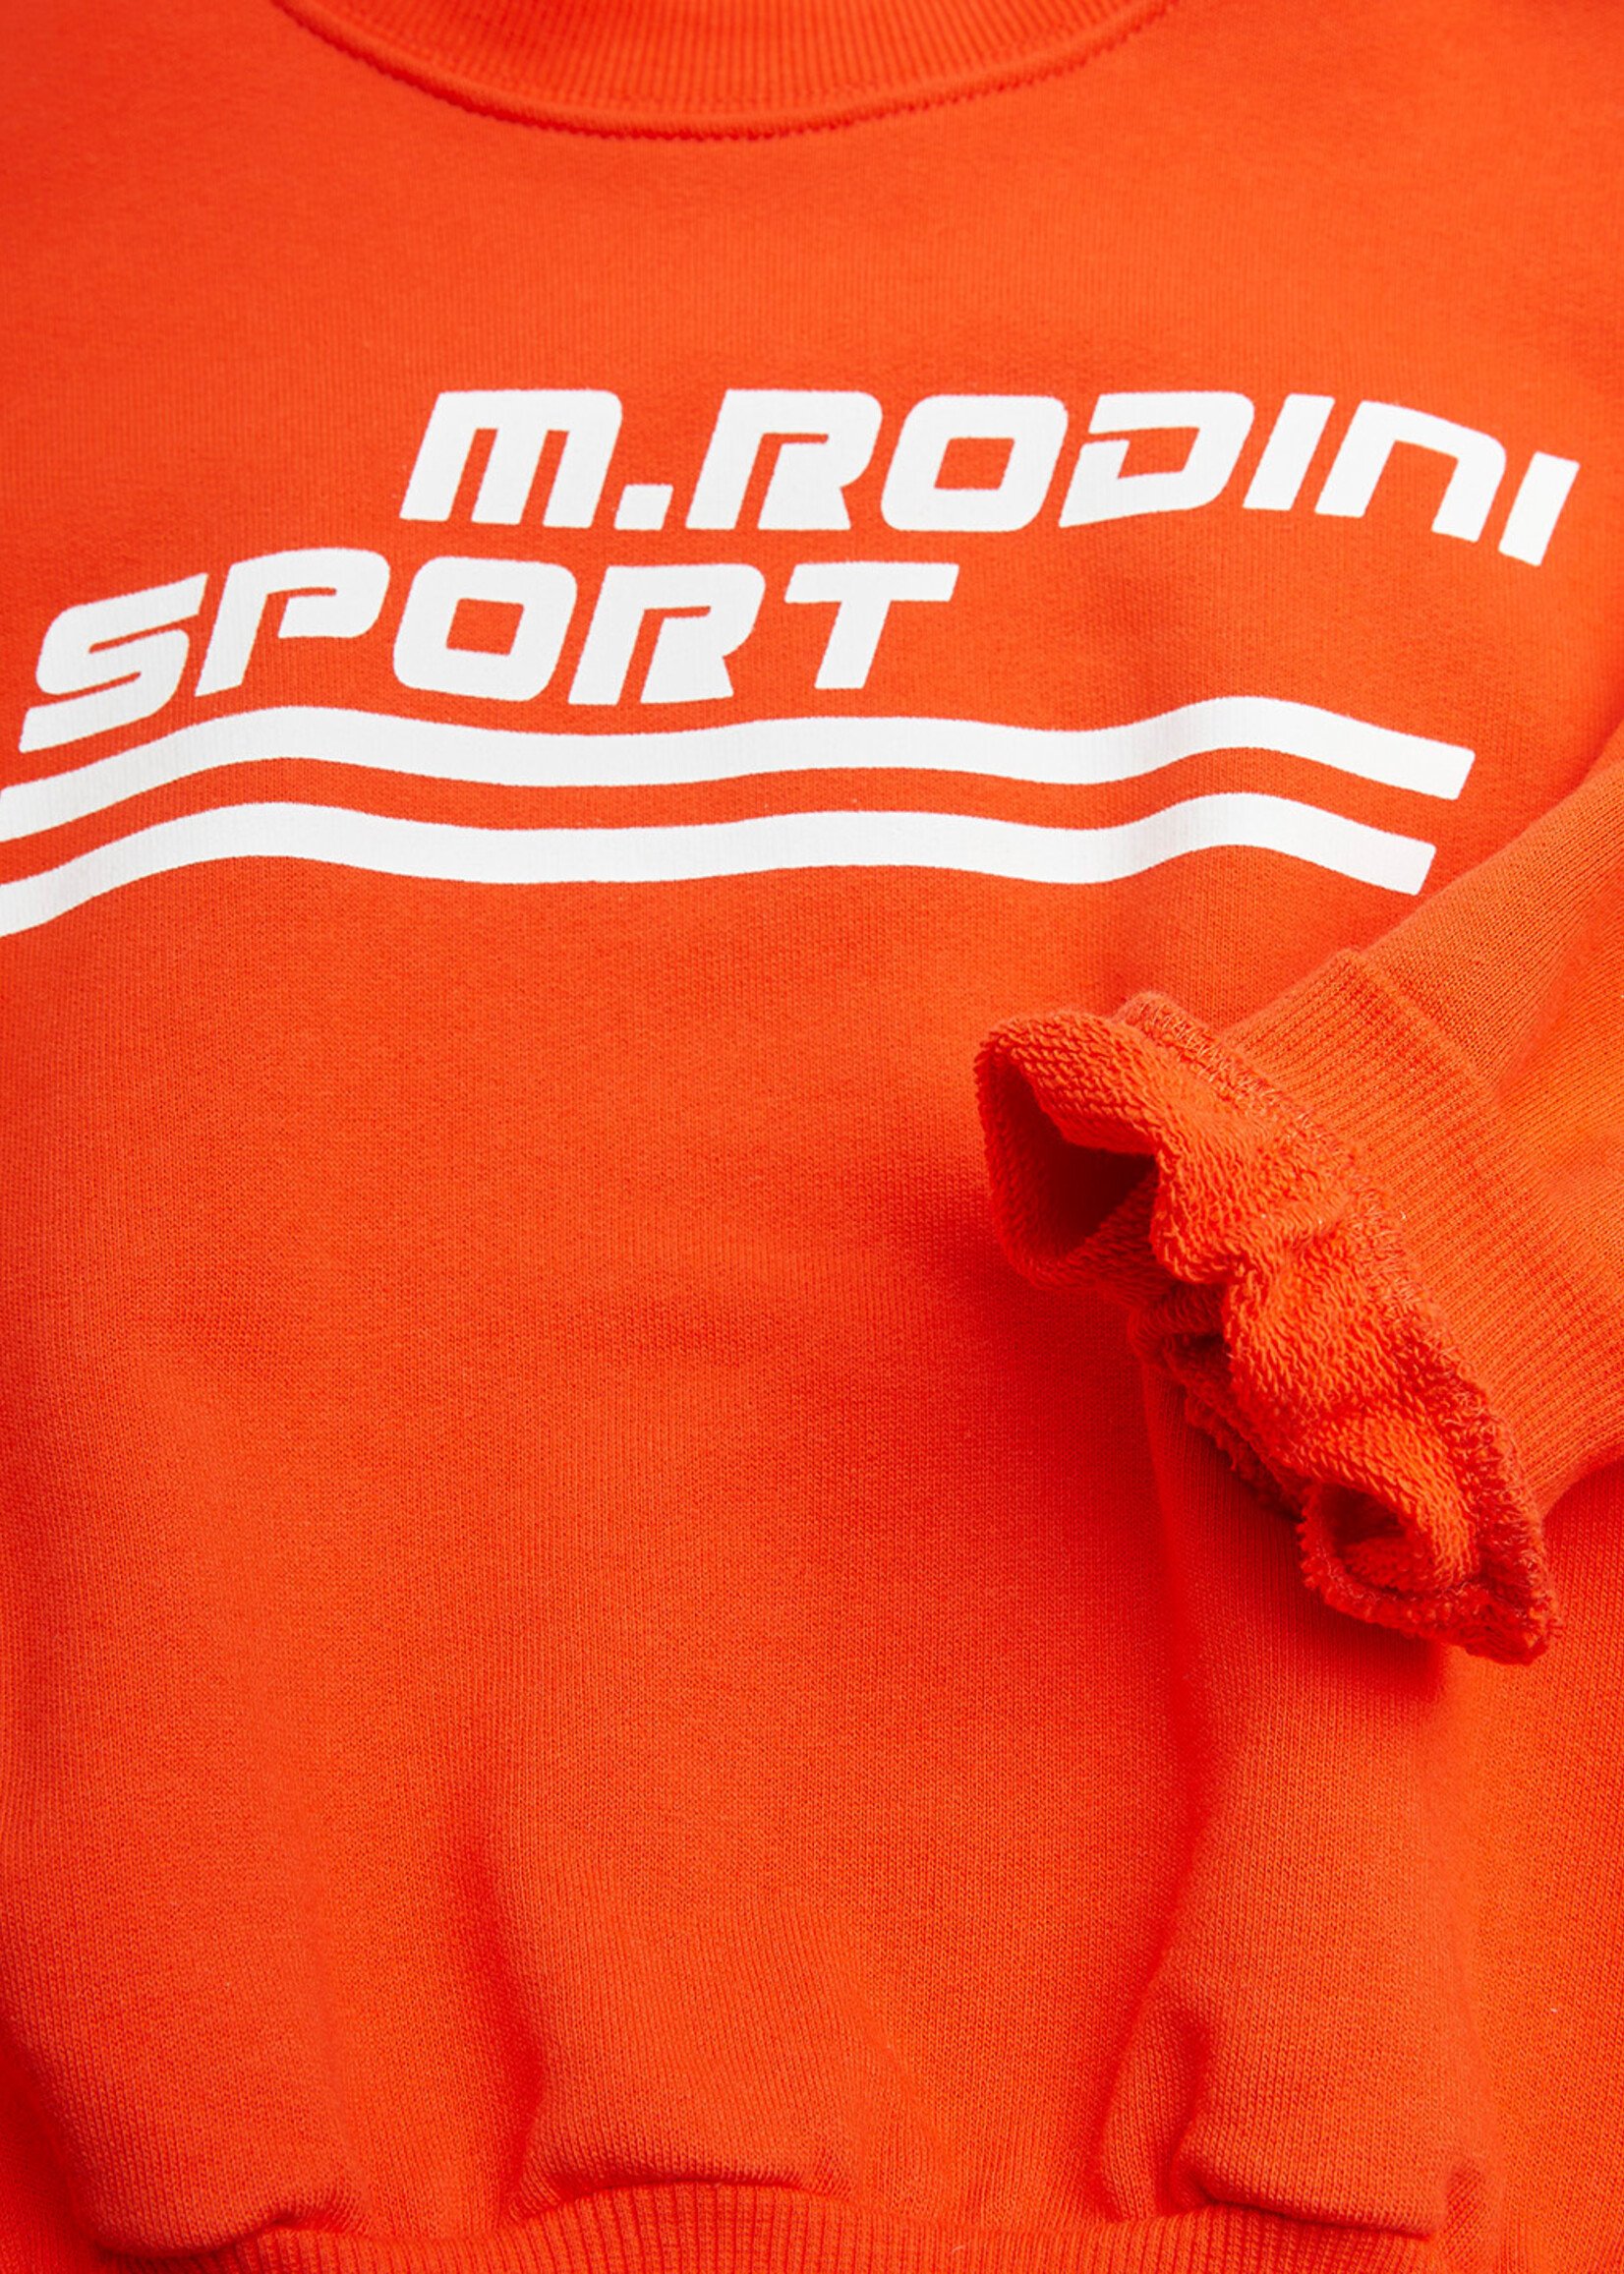 Mini Rodini MINI RODINI | M Rodini sport sp sweatshirt – Red